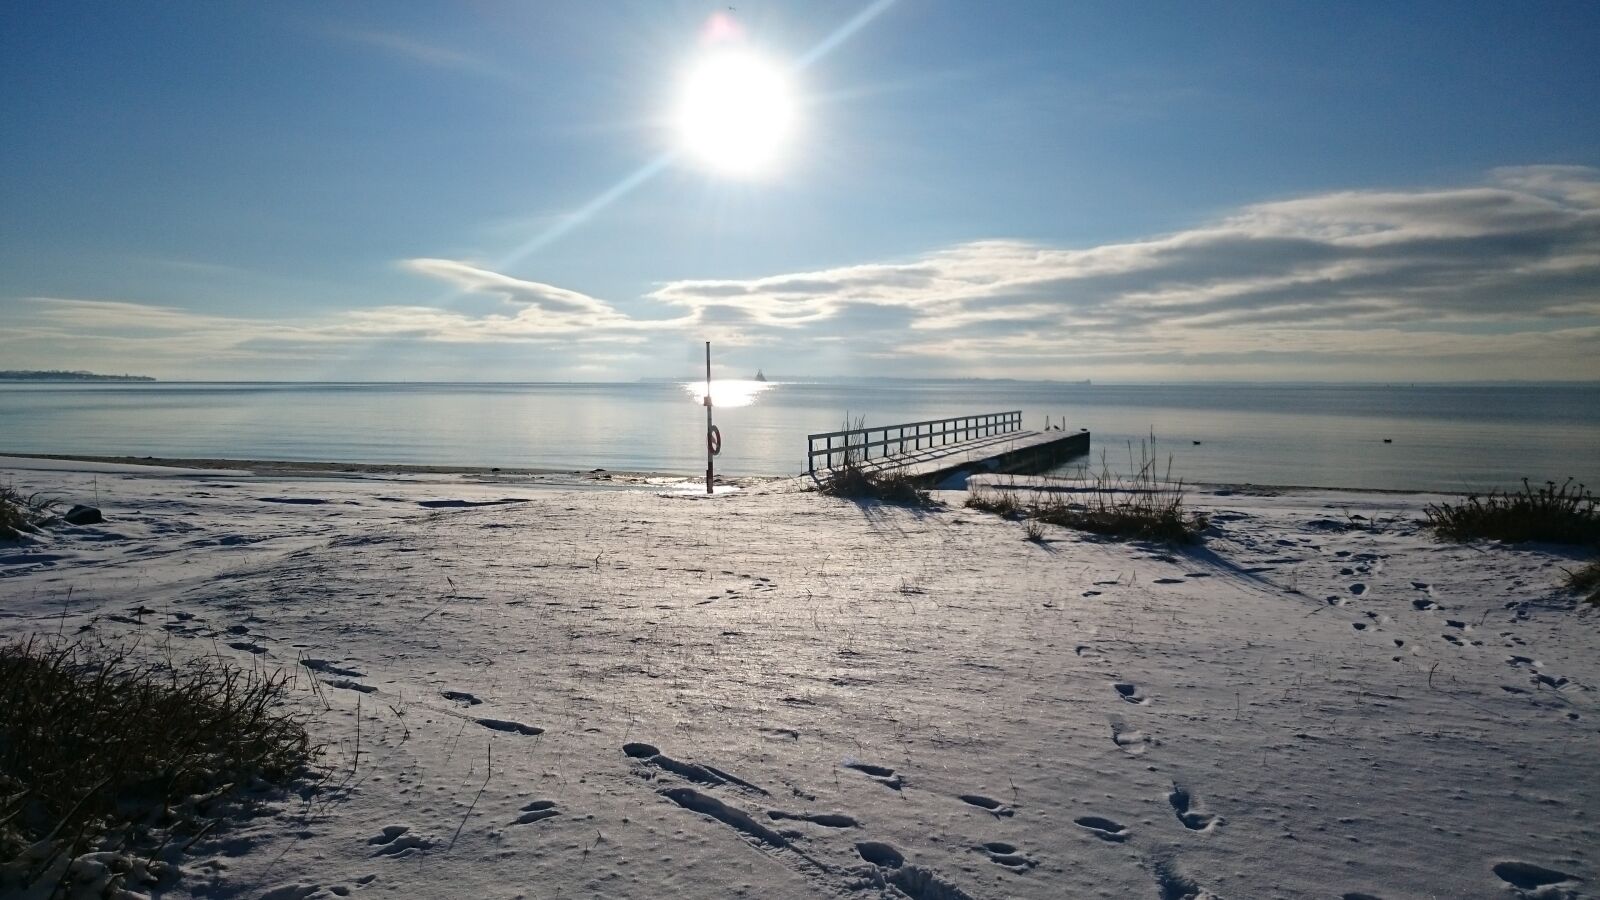 Sony Xperia Z3 sample photo. R beach, winter, sk photography